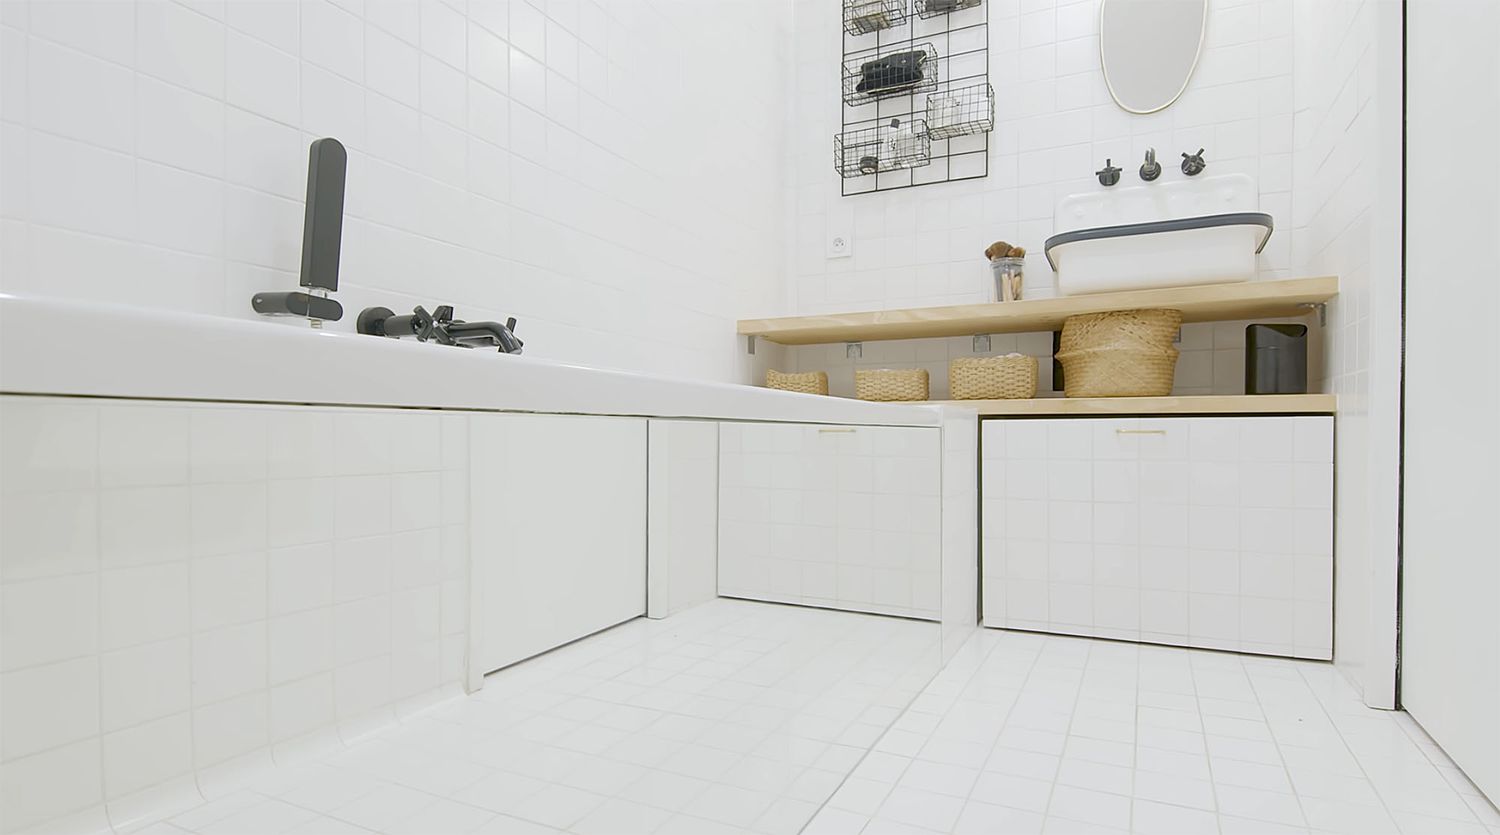 Atelier RangÃ©-DerangÃ©公寓装修由Space Factory主浴室镜子